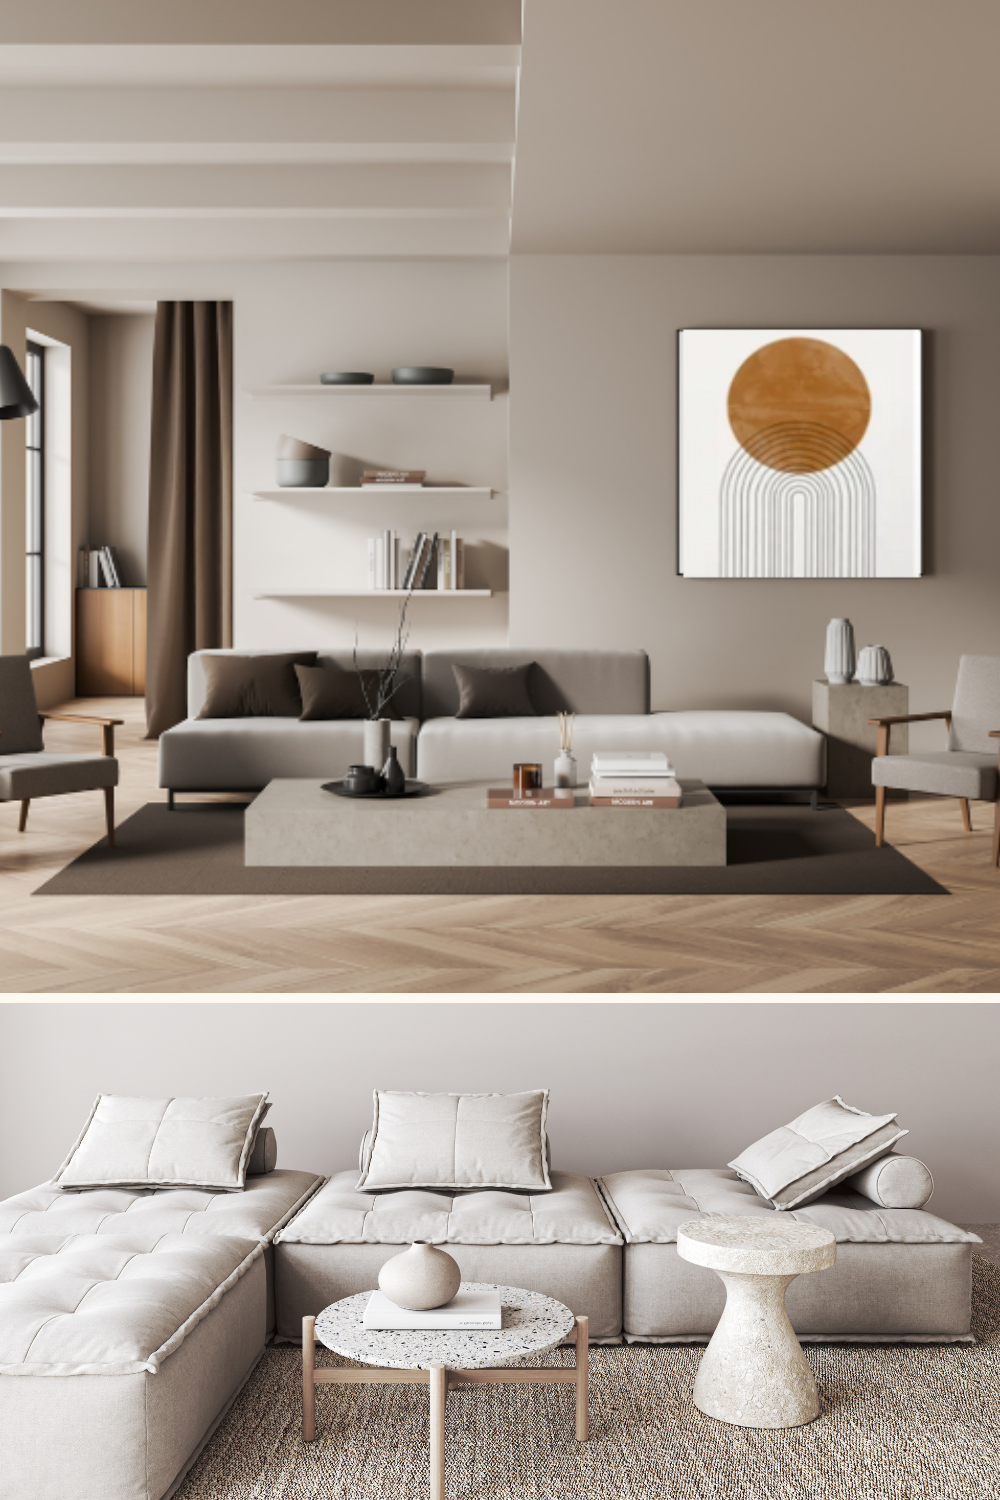 minimalist interior design ideas